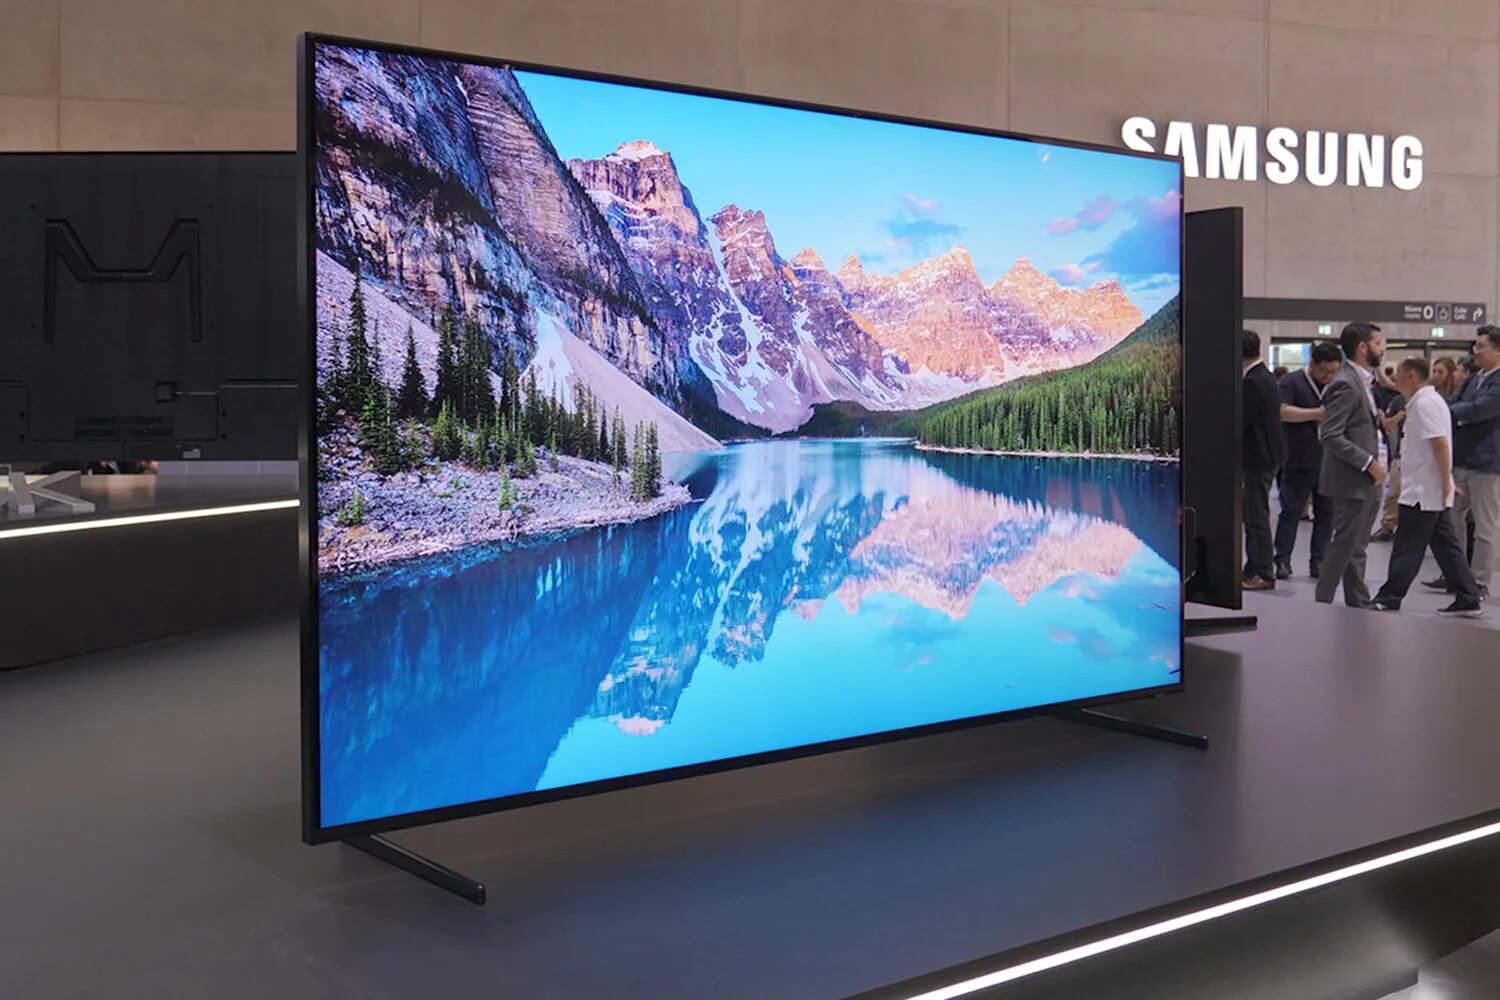 8 к телевизору купить. Samsung QLED 8k. Телевизор самсунг QLED 8к. Телевизор самсунг 85 дюймов. Samsung QLED 8k 900r.